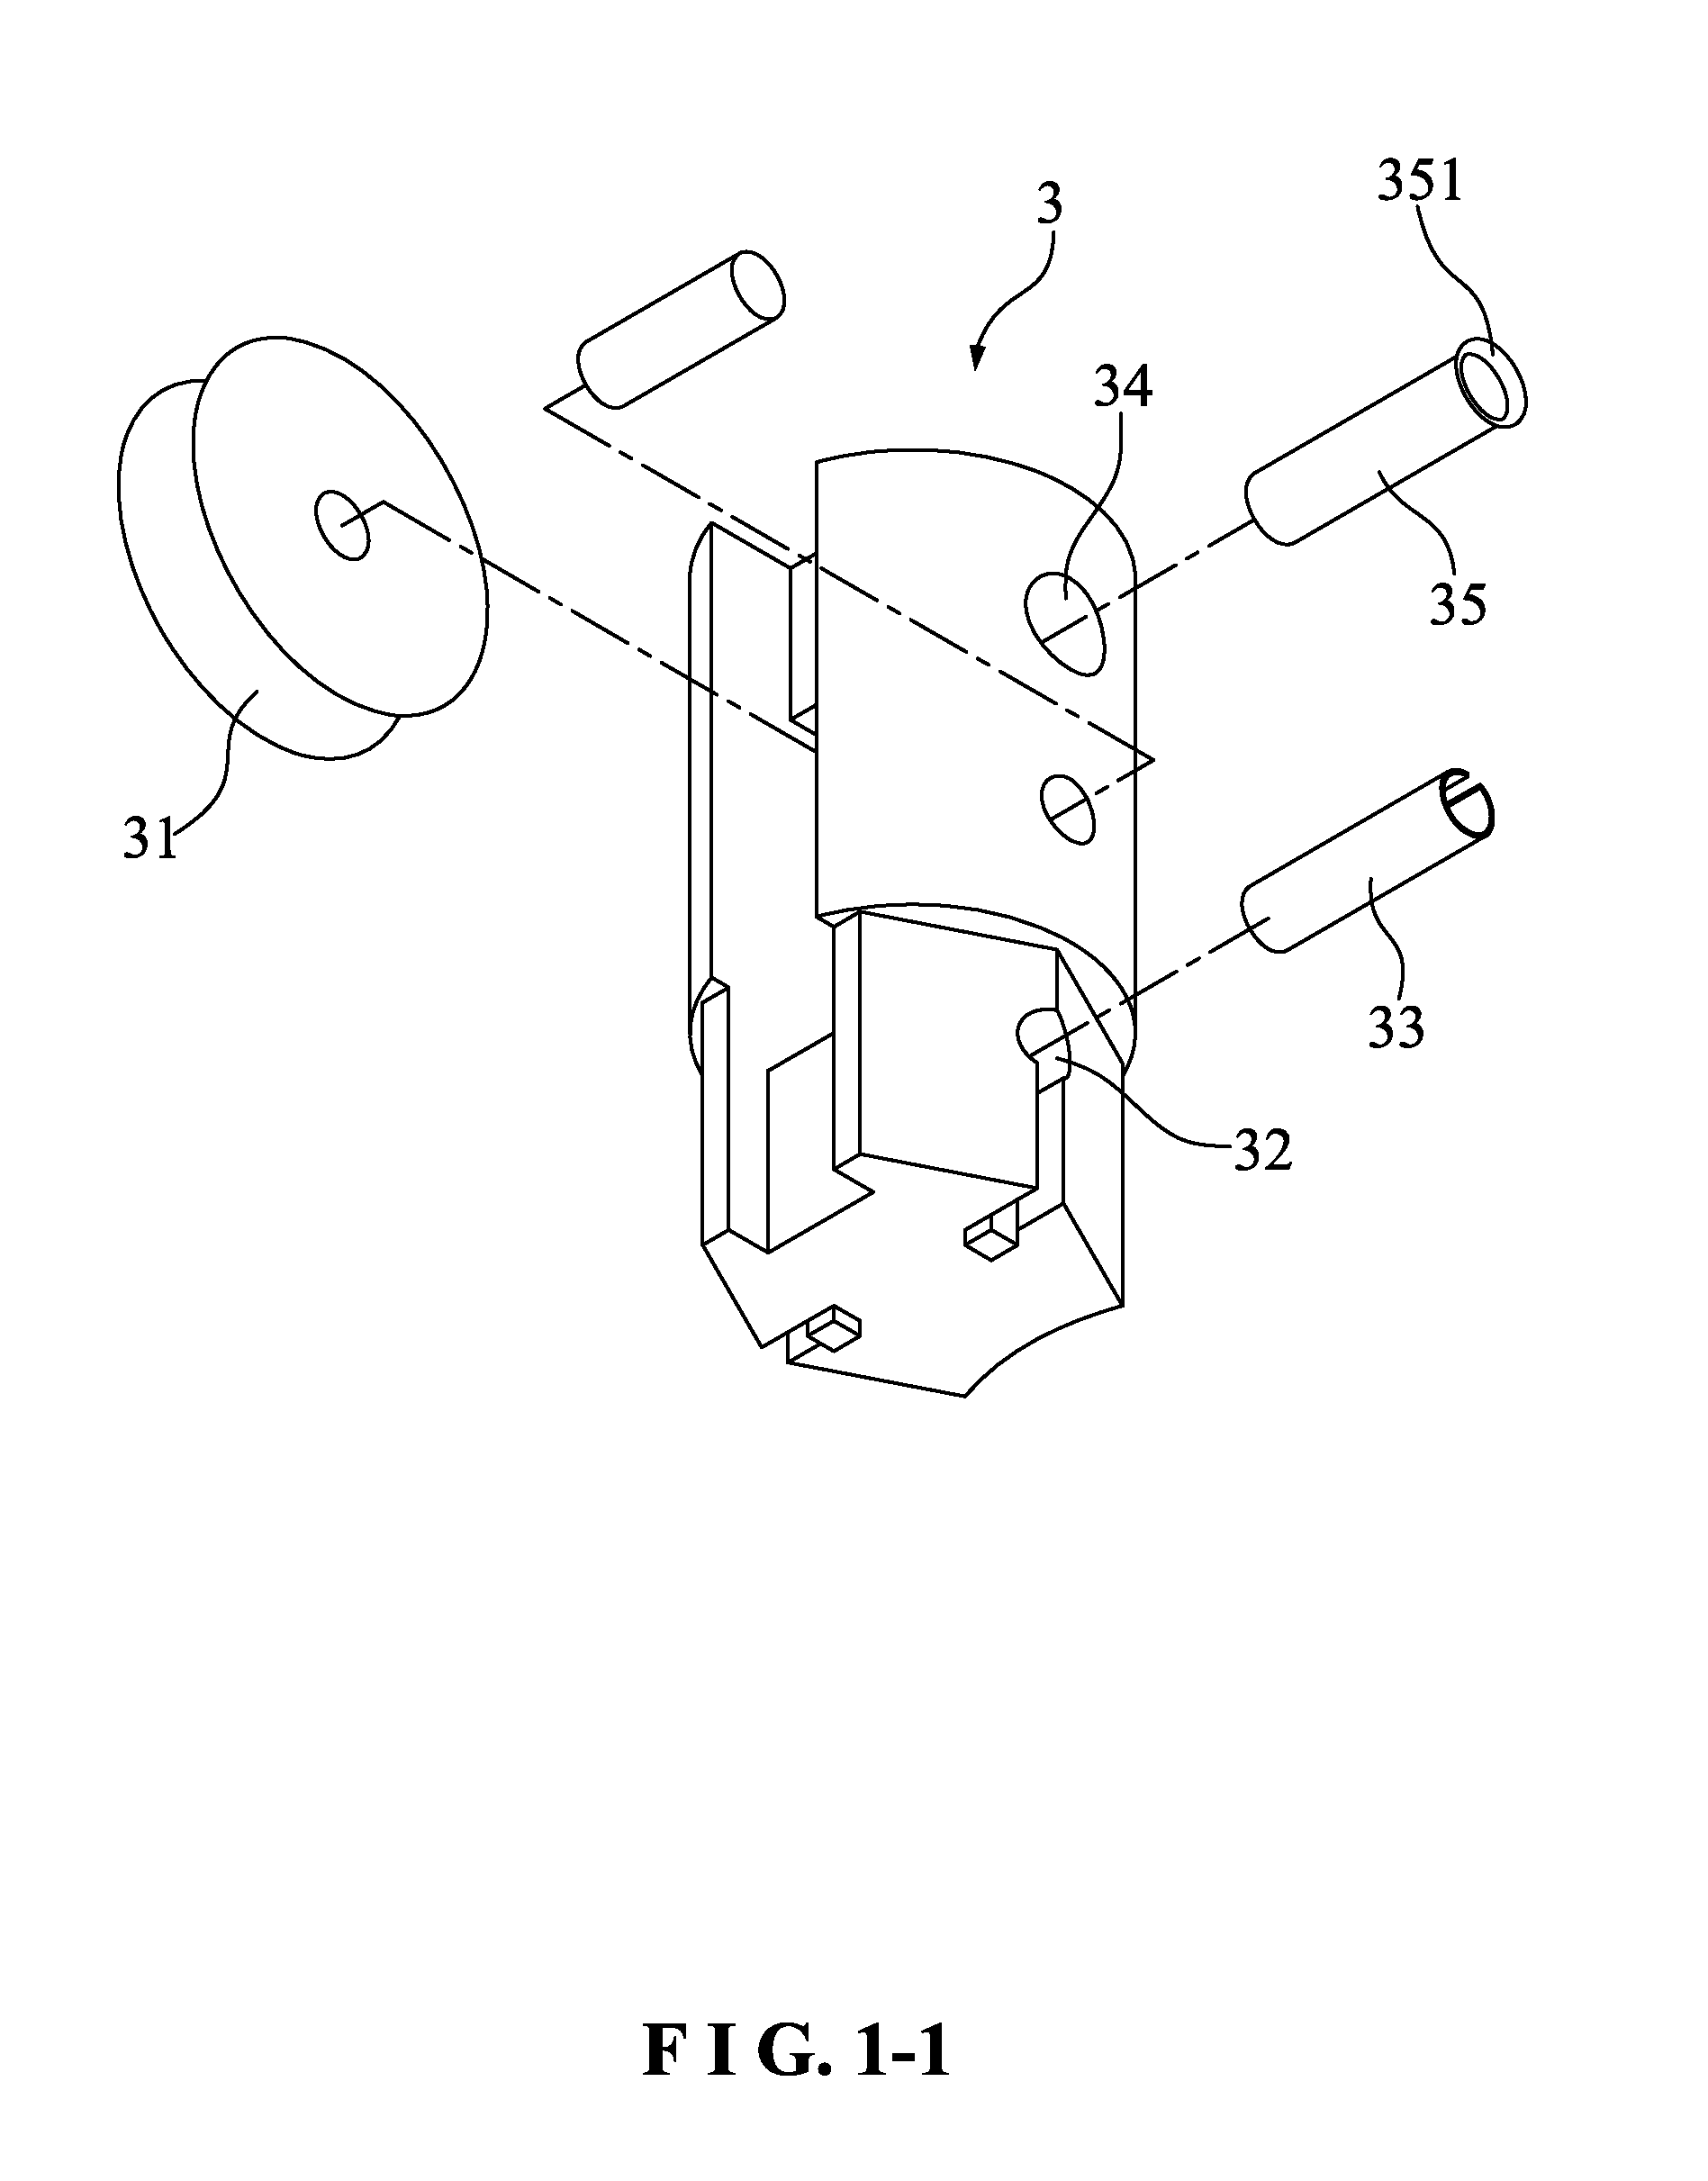 Control mechanism of full-automatic multi-folded umbrella